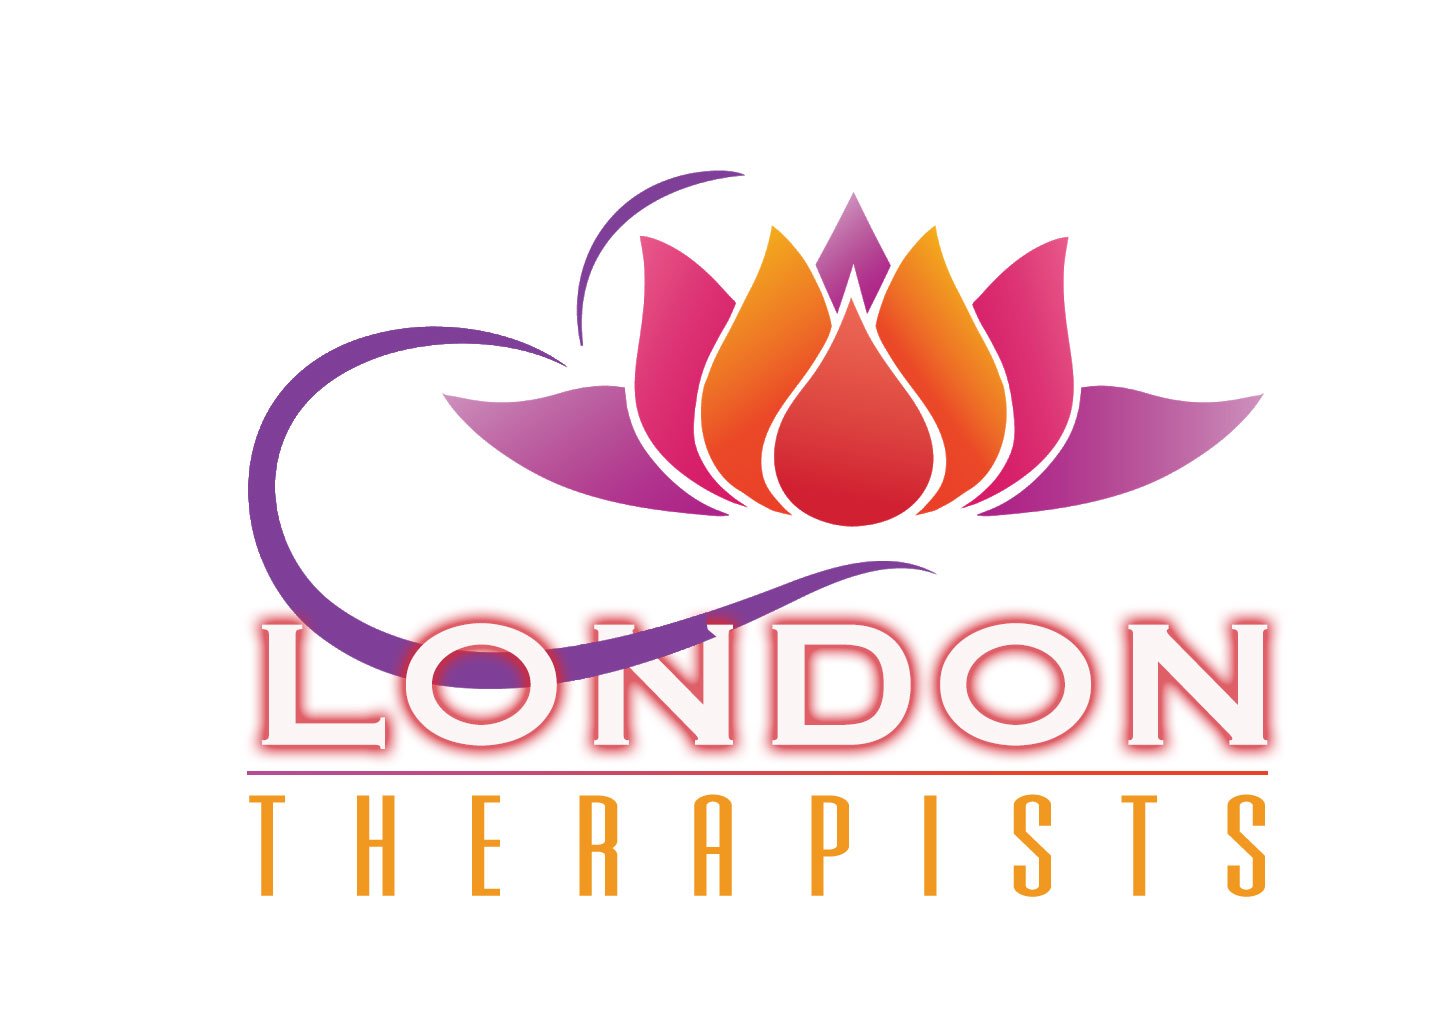 London Therapists logo